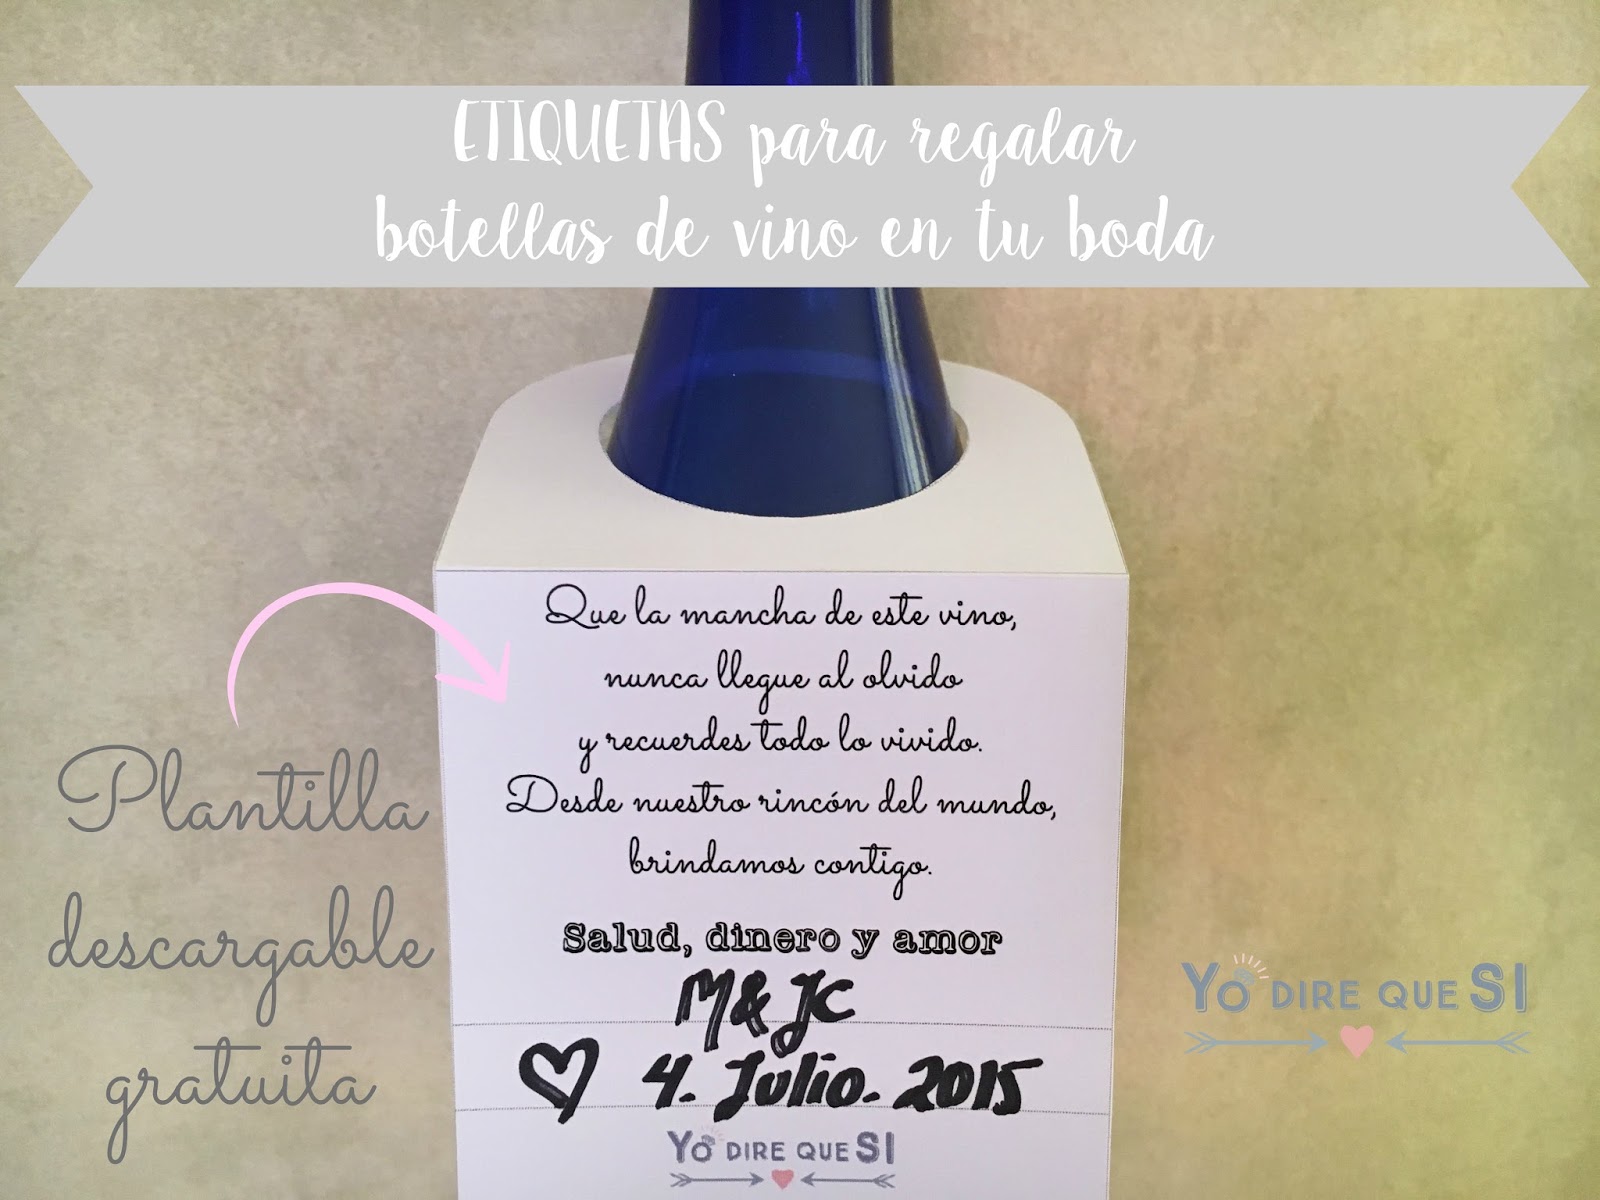 Blog de bodas Yo que si: personalizadas para regalar botellas de vino en tu boda. Plantilla descargable gratuita.